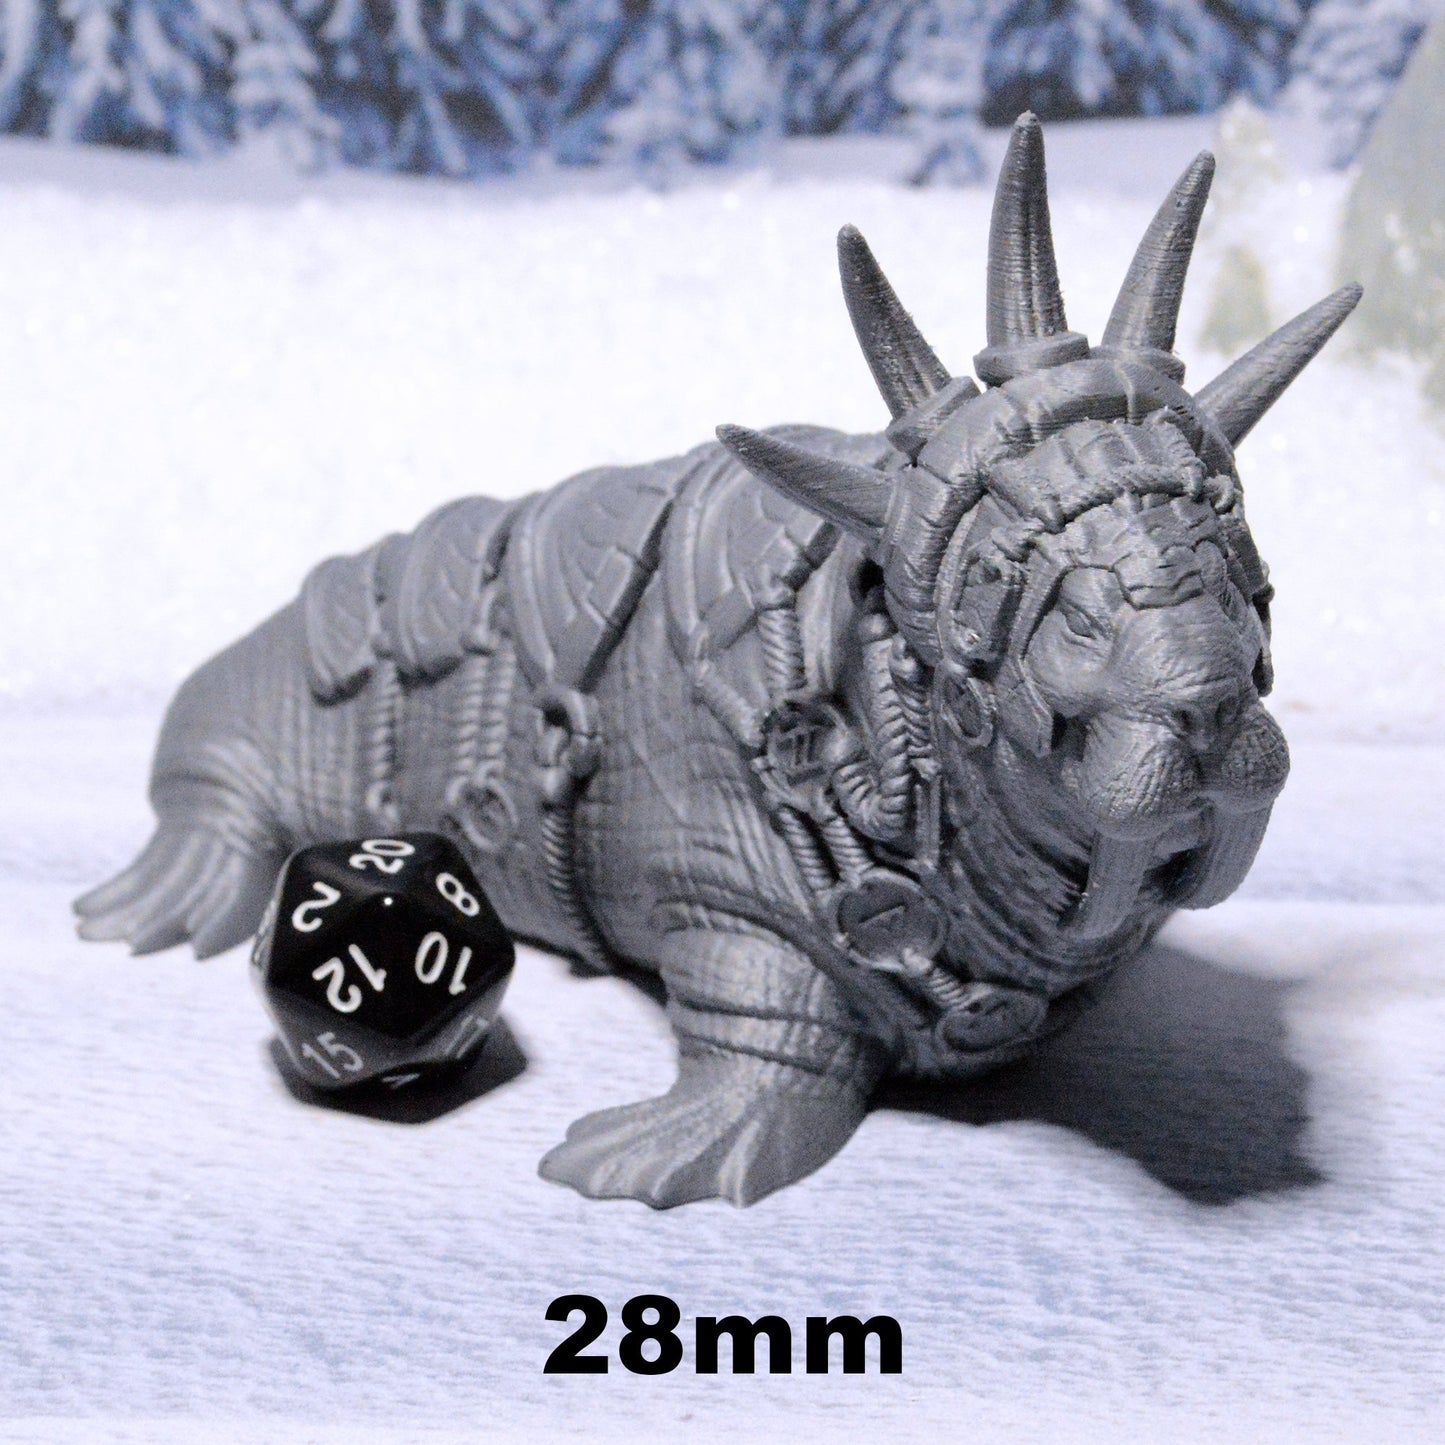 Giant Armored Walrus 15mm 28mm 42mm for D&D Terrain, DnD Terrain, Icewind Dale Terrain, Pathfinder Terrain, Arctic Frozen Snowy Icy Animal